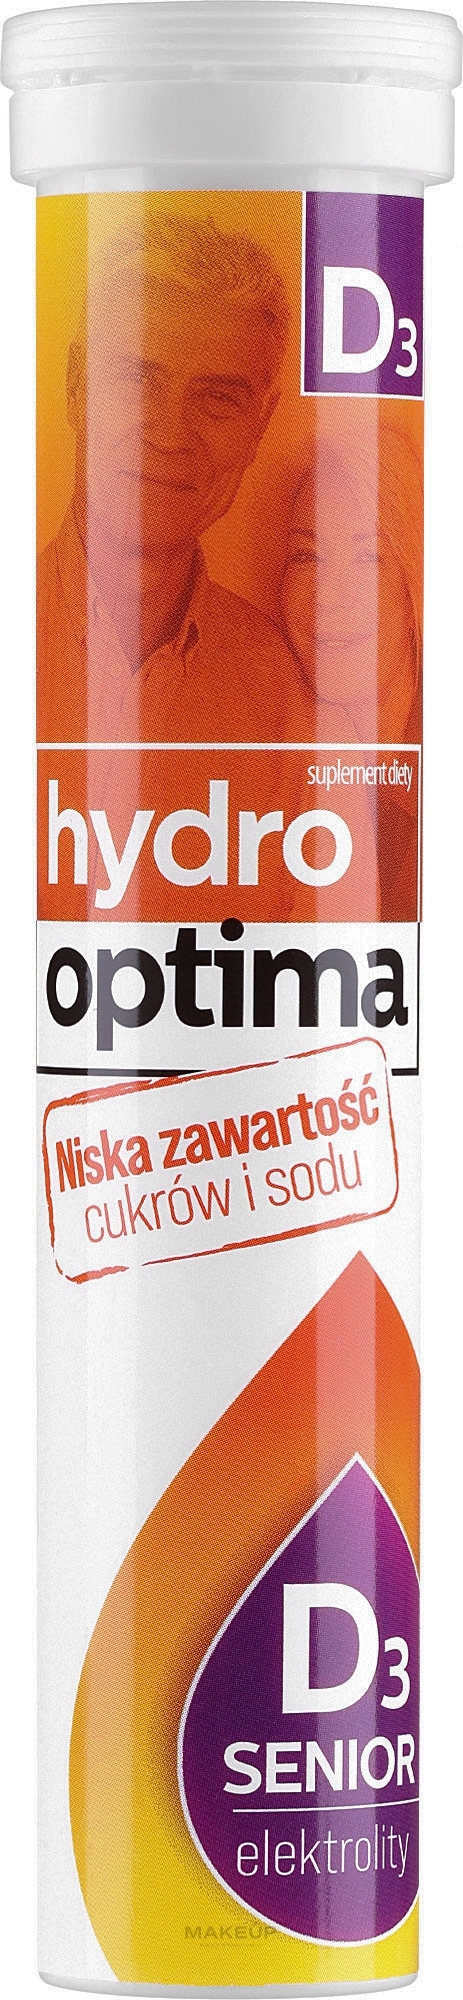 Suplement diety w tabletkach - Aflofarm Hydro Optima Senior D3 — Zdjęcie 20 szt.